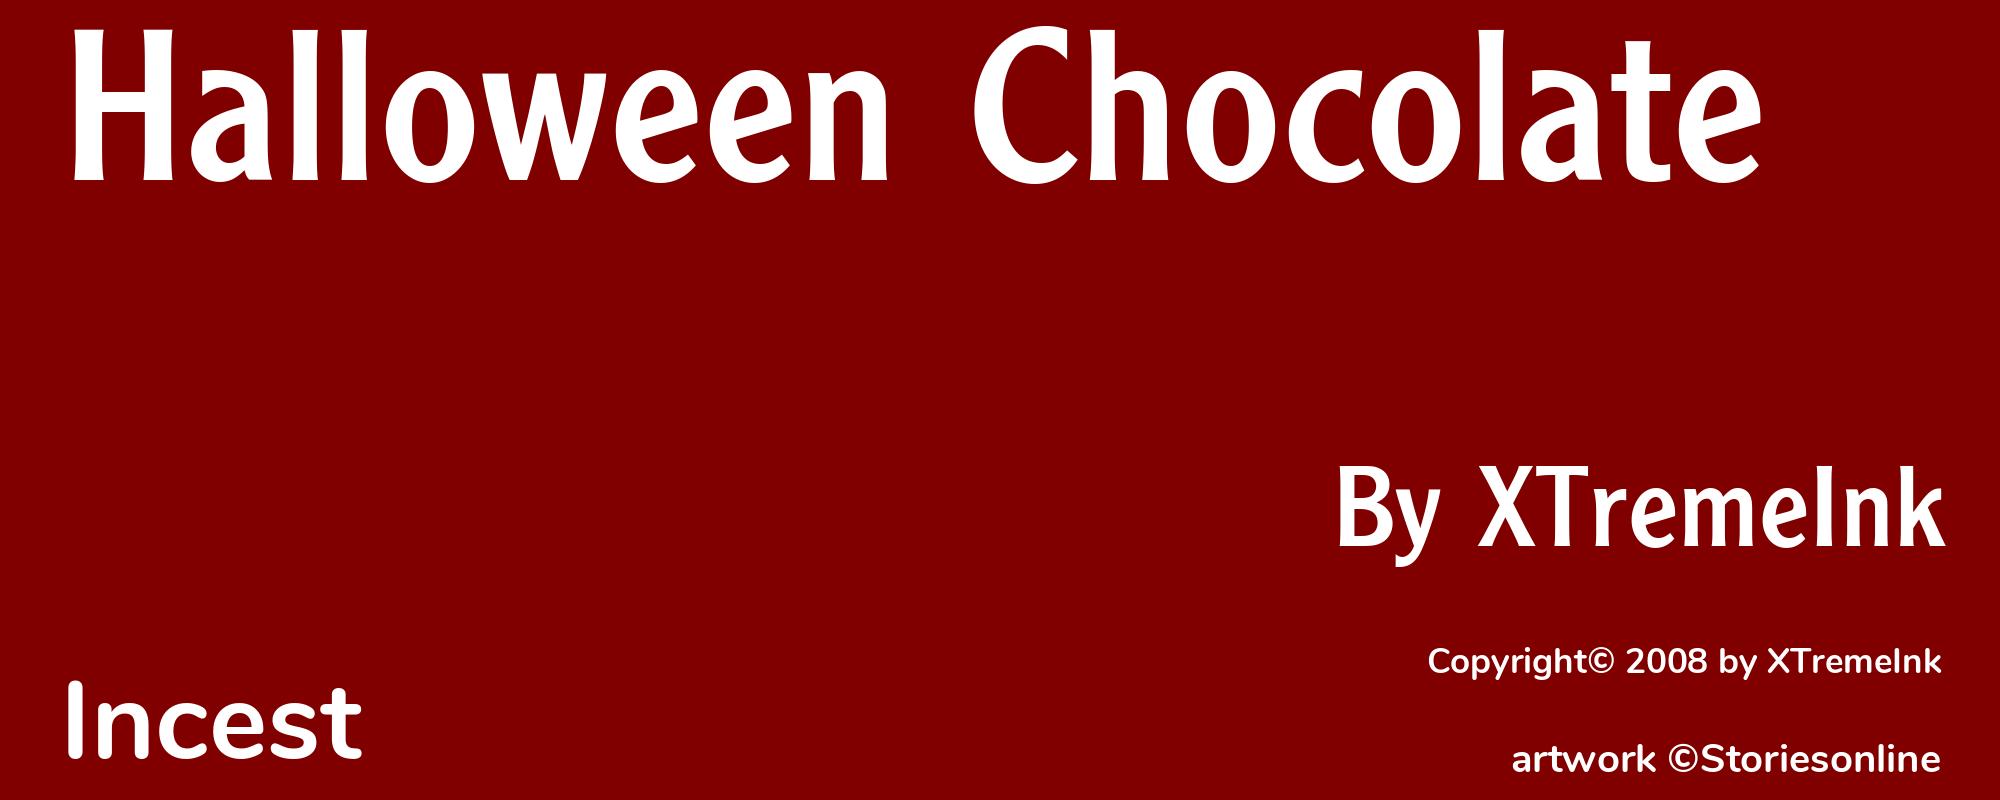 Halloween Chocolate - Cover